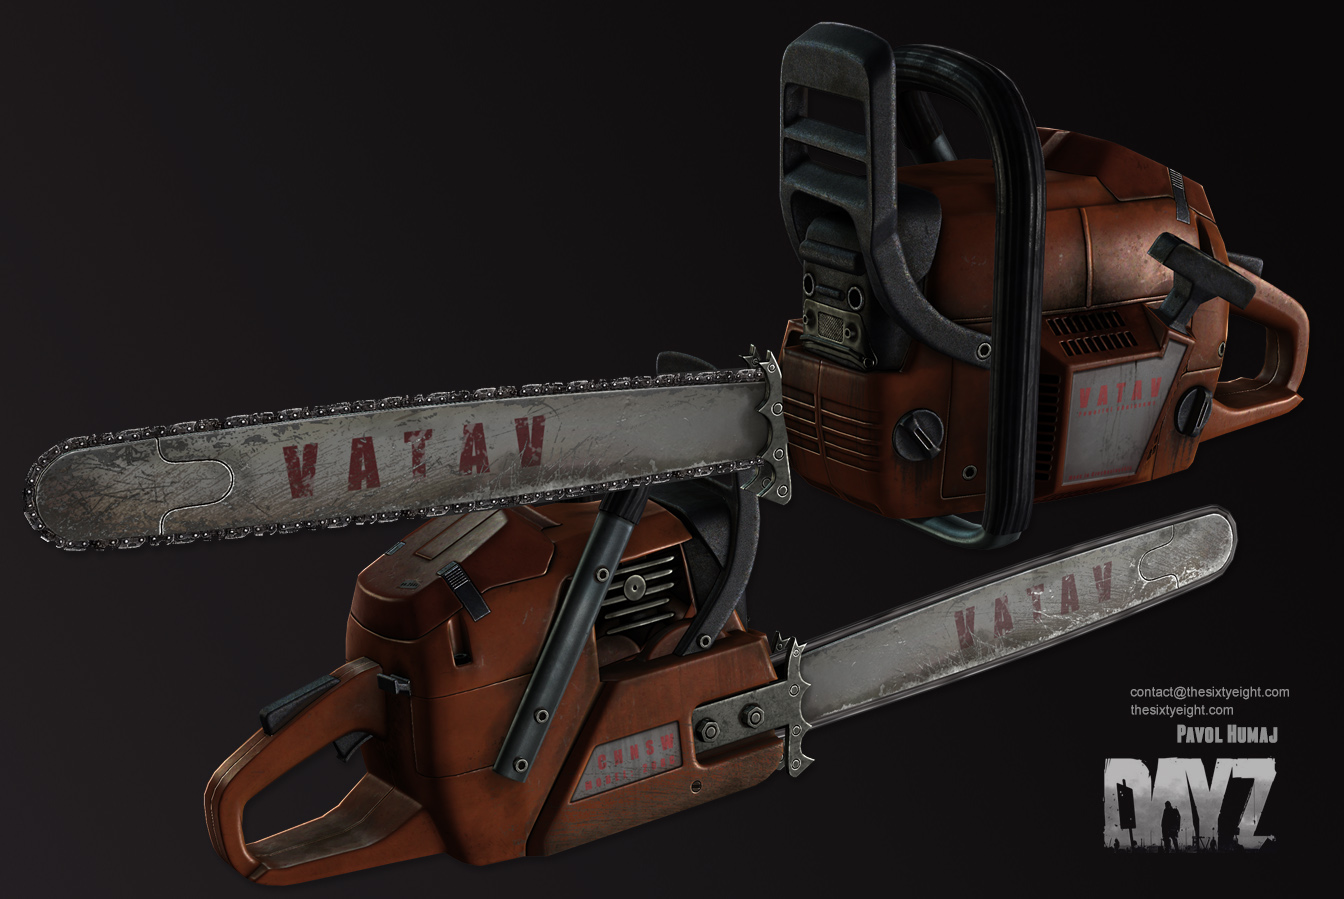 Chainsaw model created by Pavol Humaj for DayZ